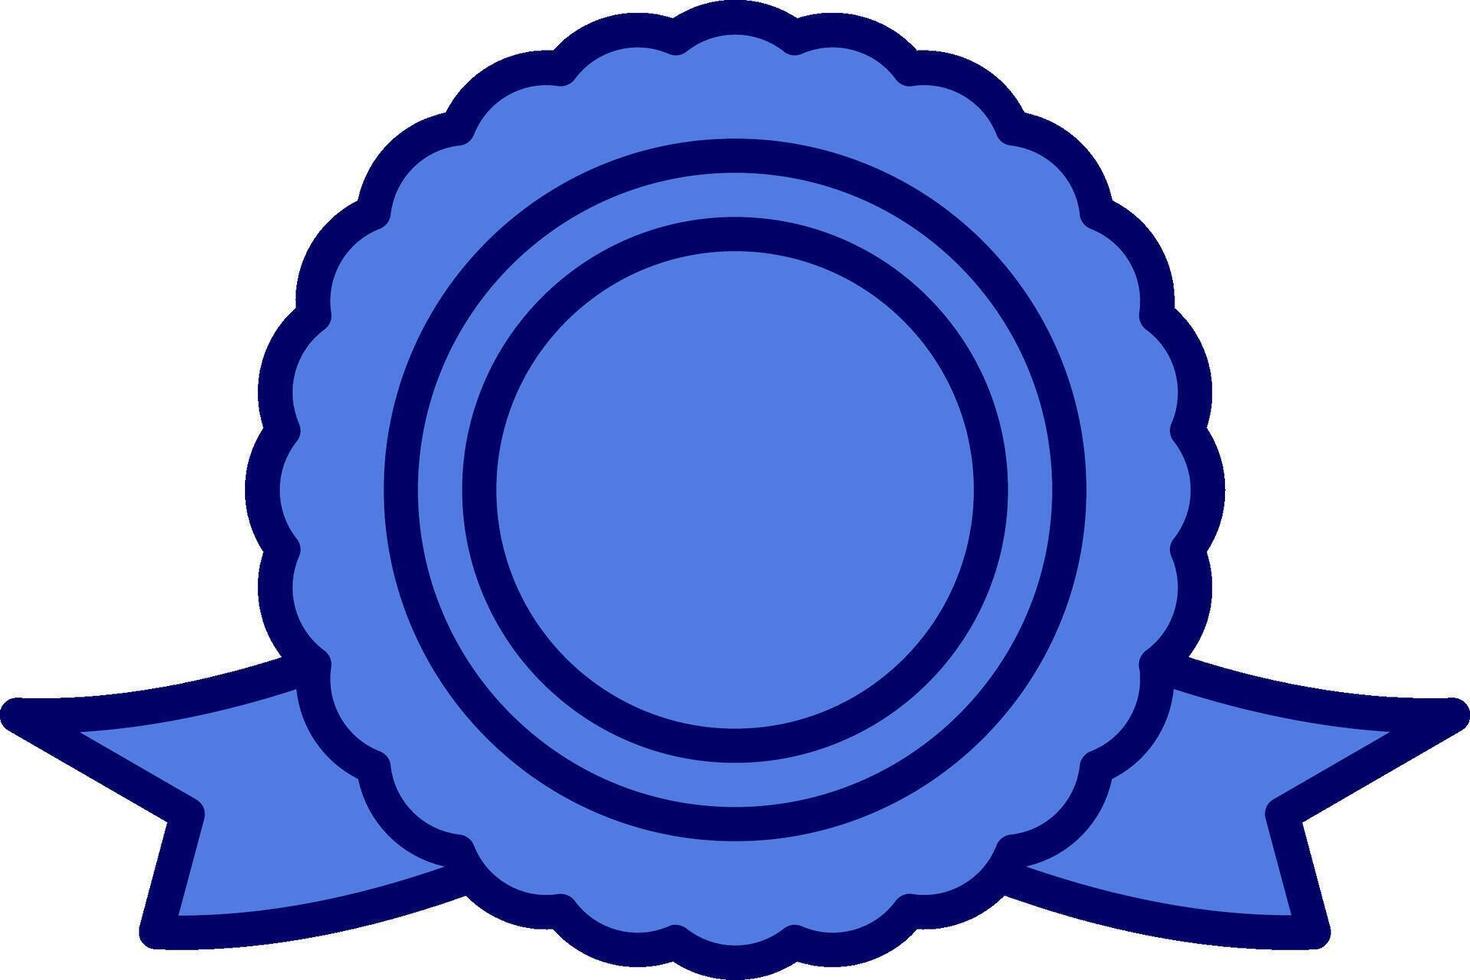 ícone de vetor de emblema